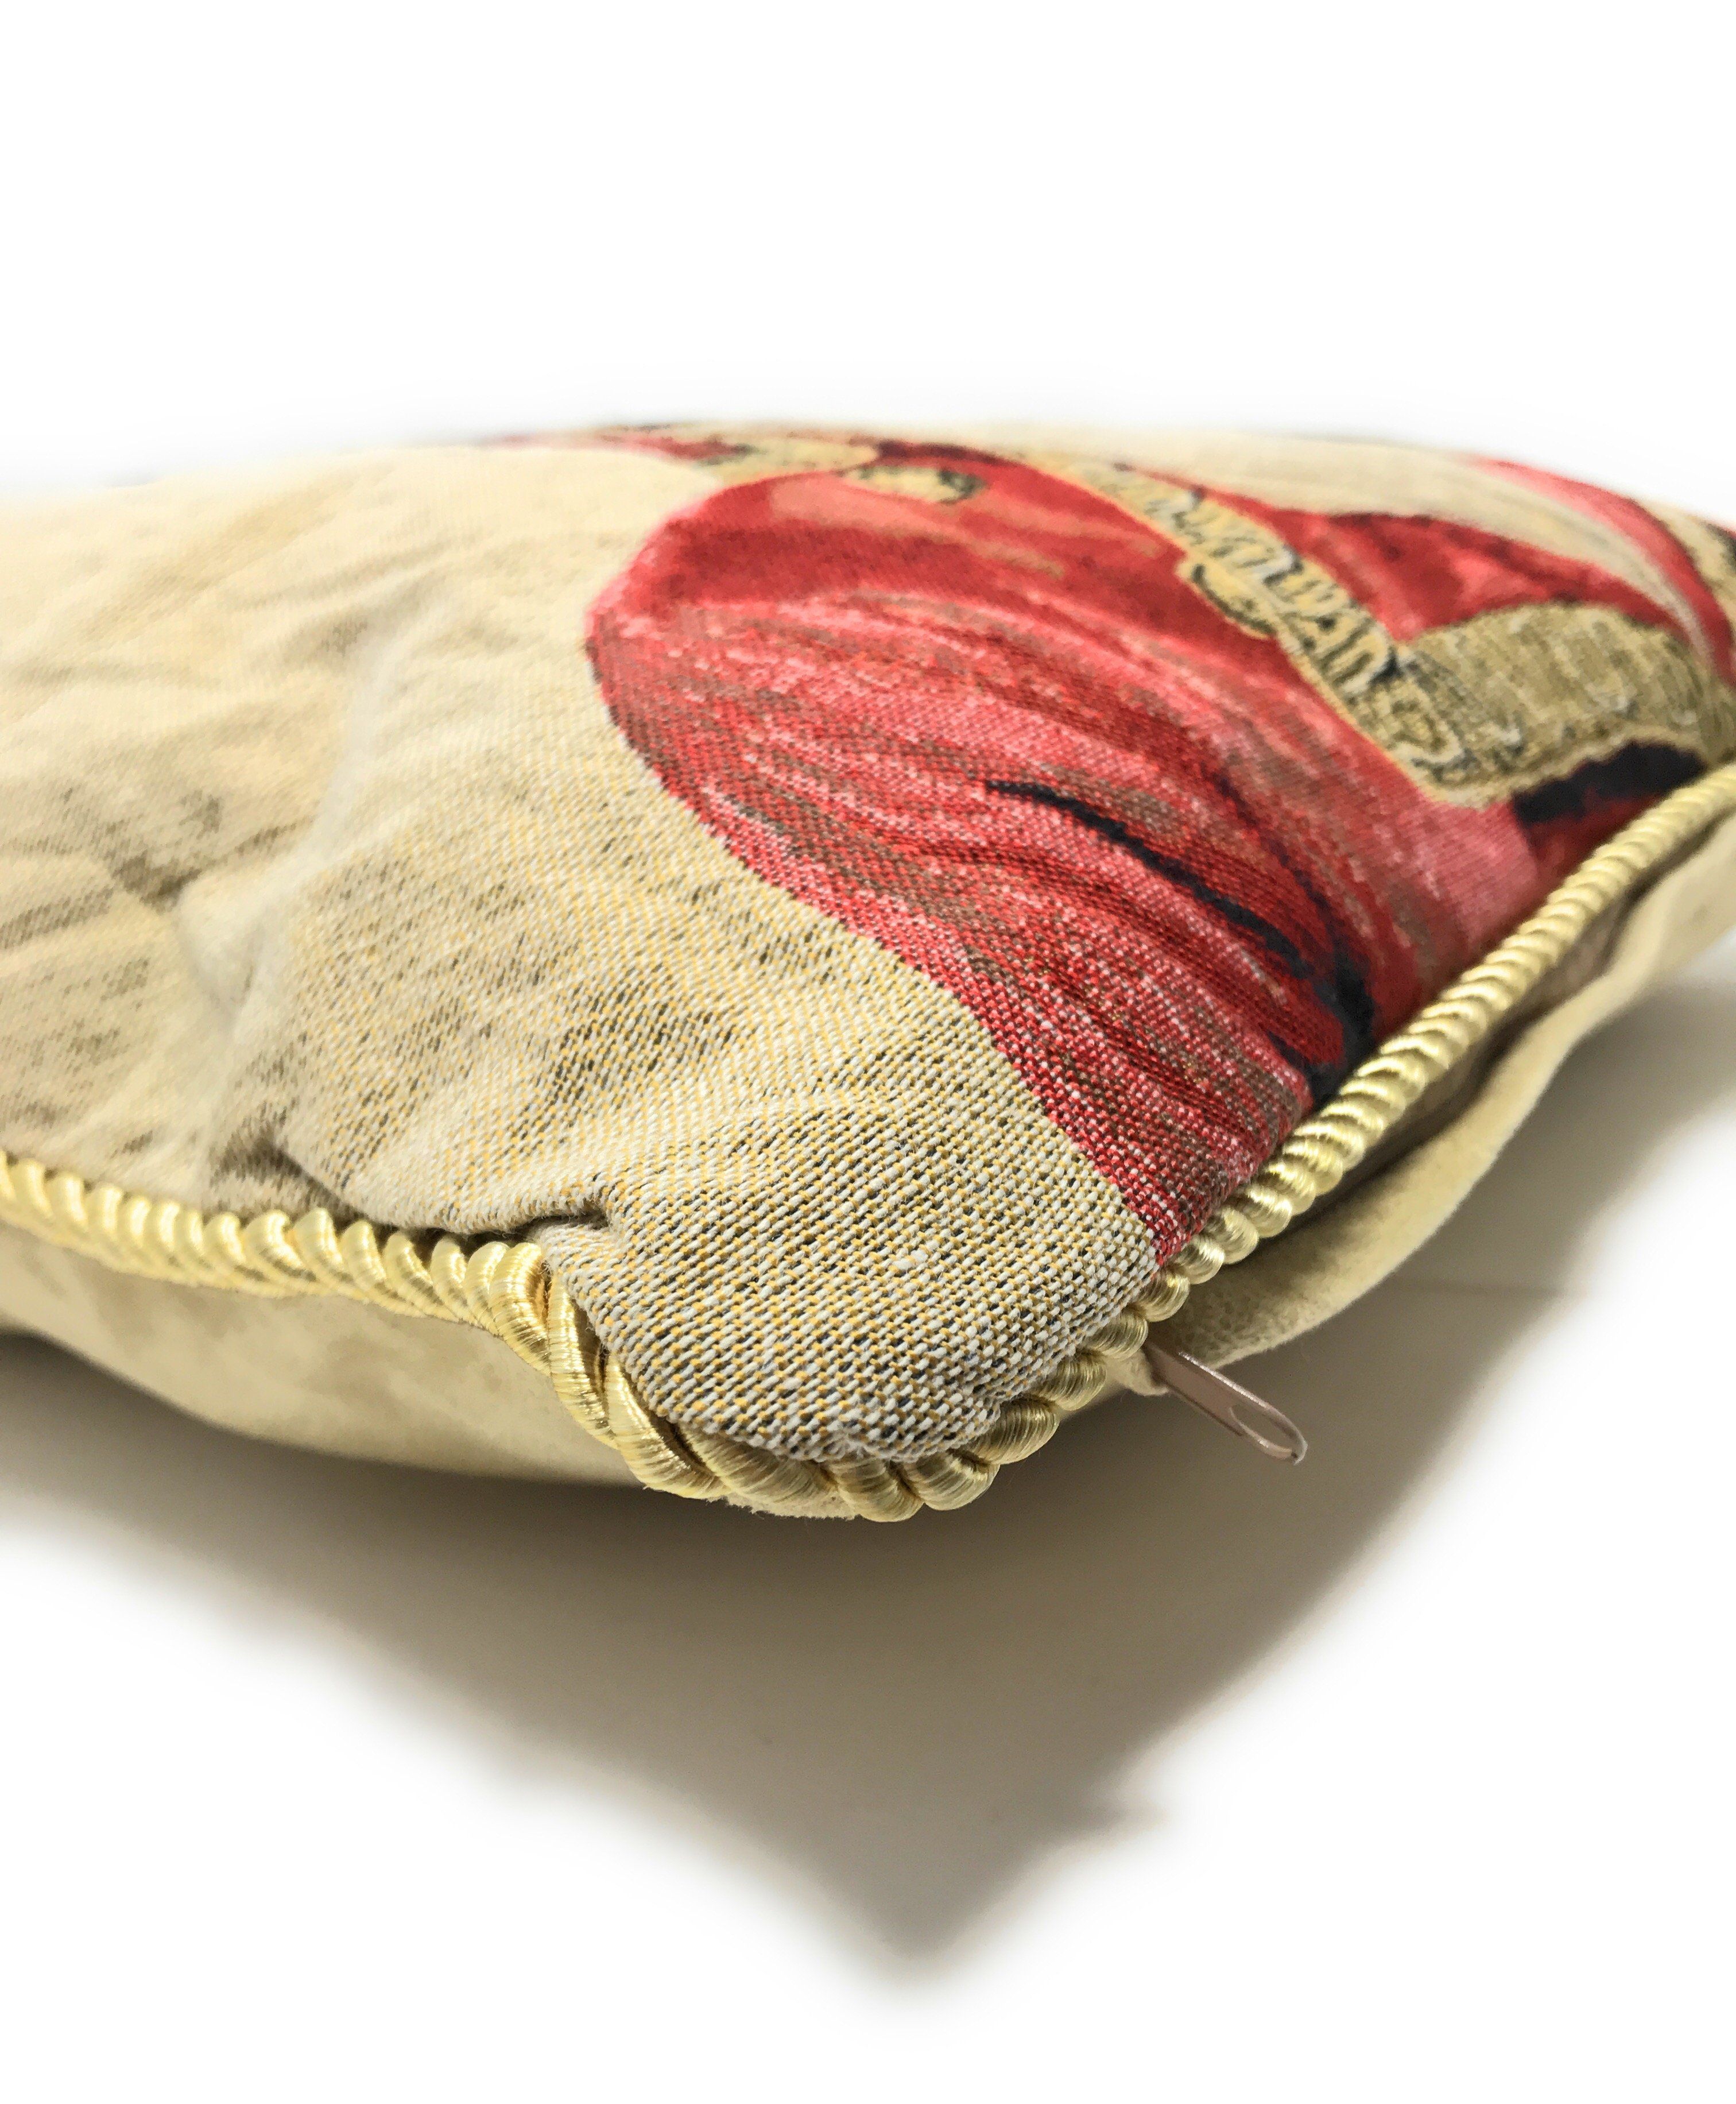 Tache Napoleon Bowaparte Vintage Tapestry Throw Pillow Cover (CC-6011) - Tache Home Fashion